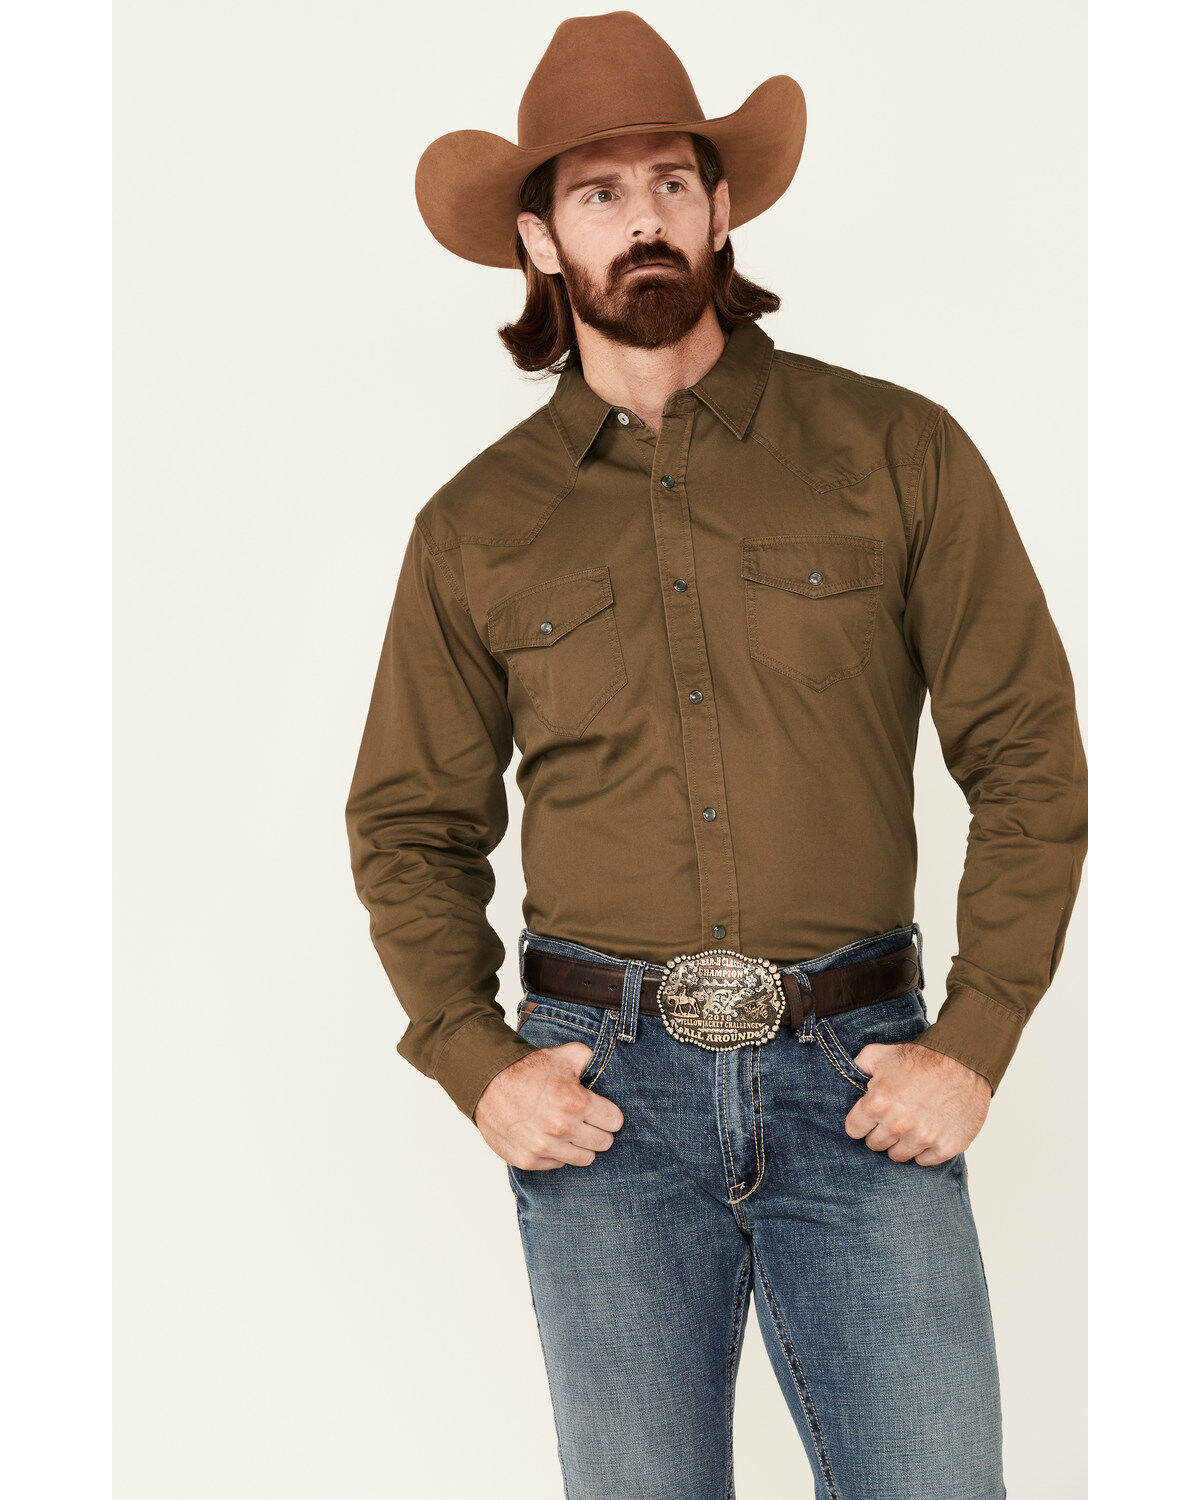 cowboy shirts